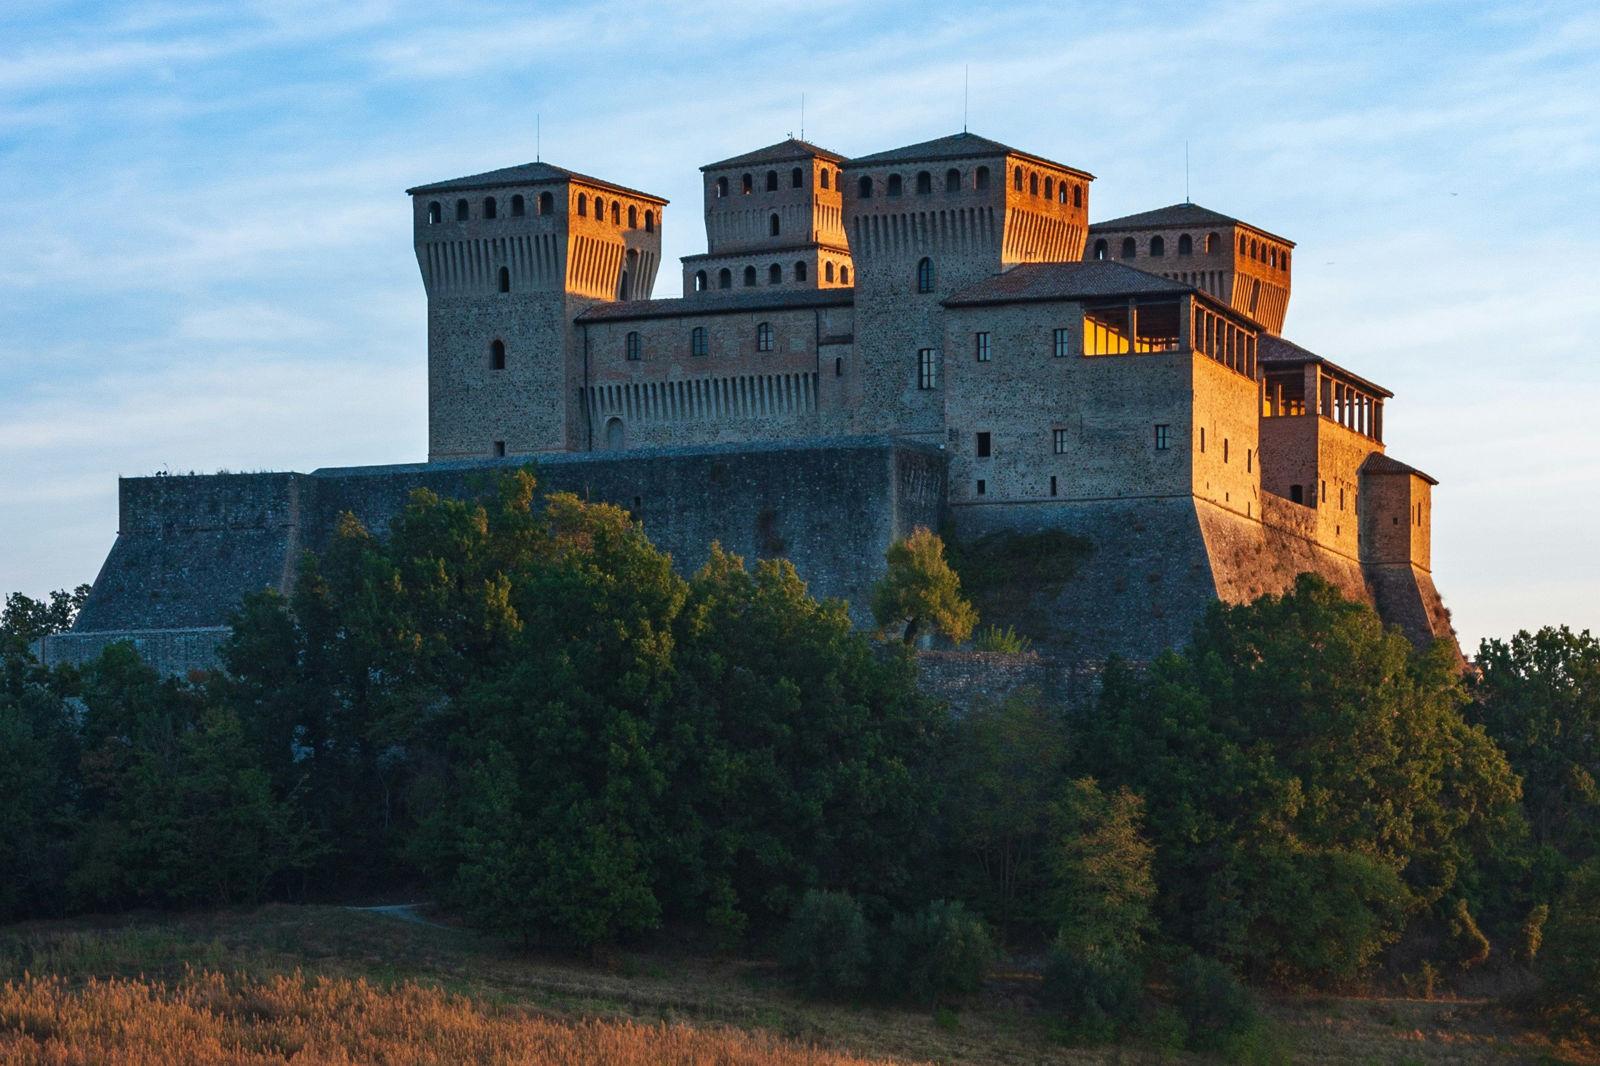 Castello di Torrechiara - Parma